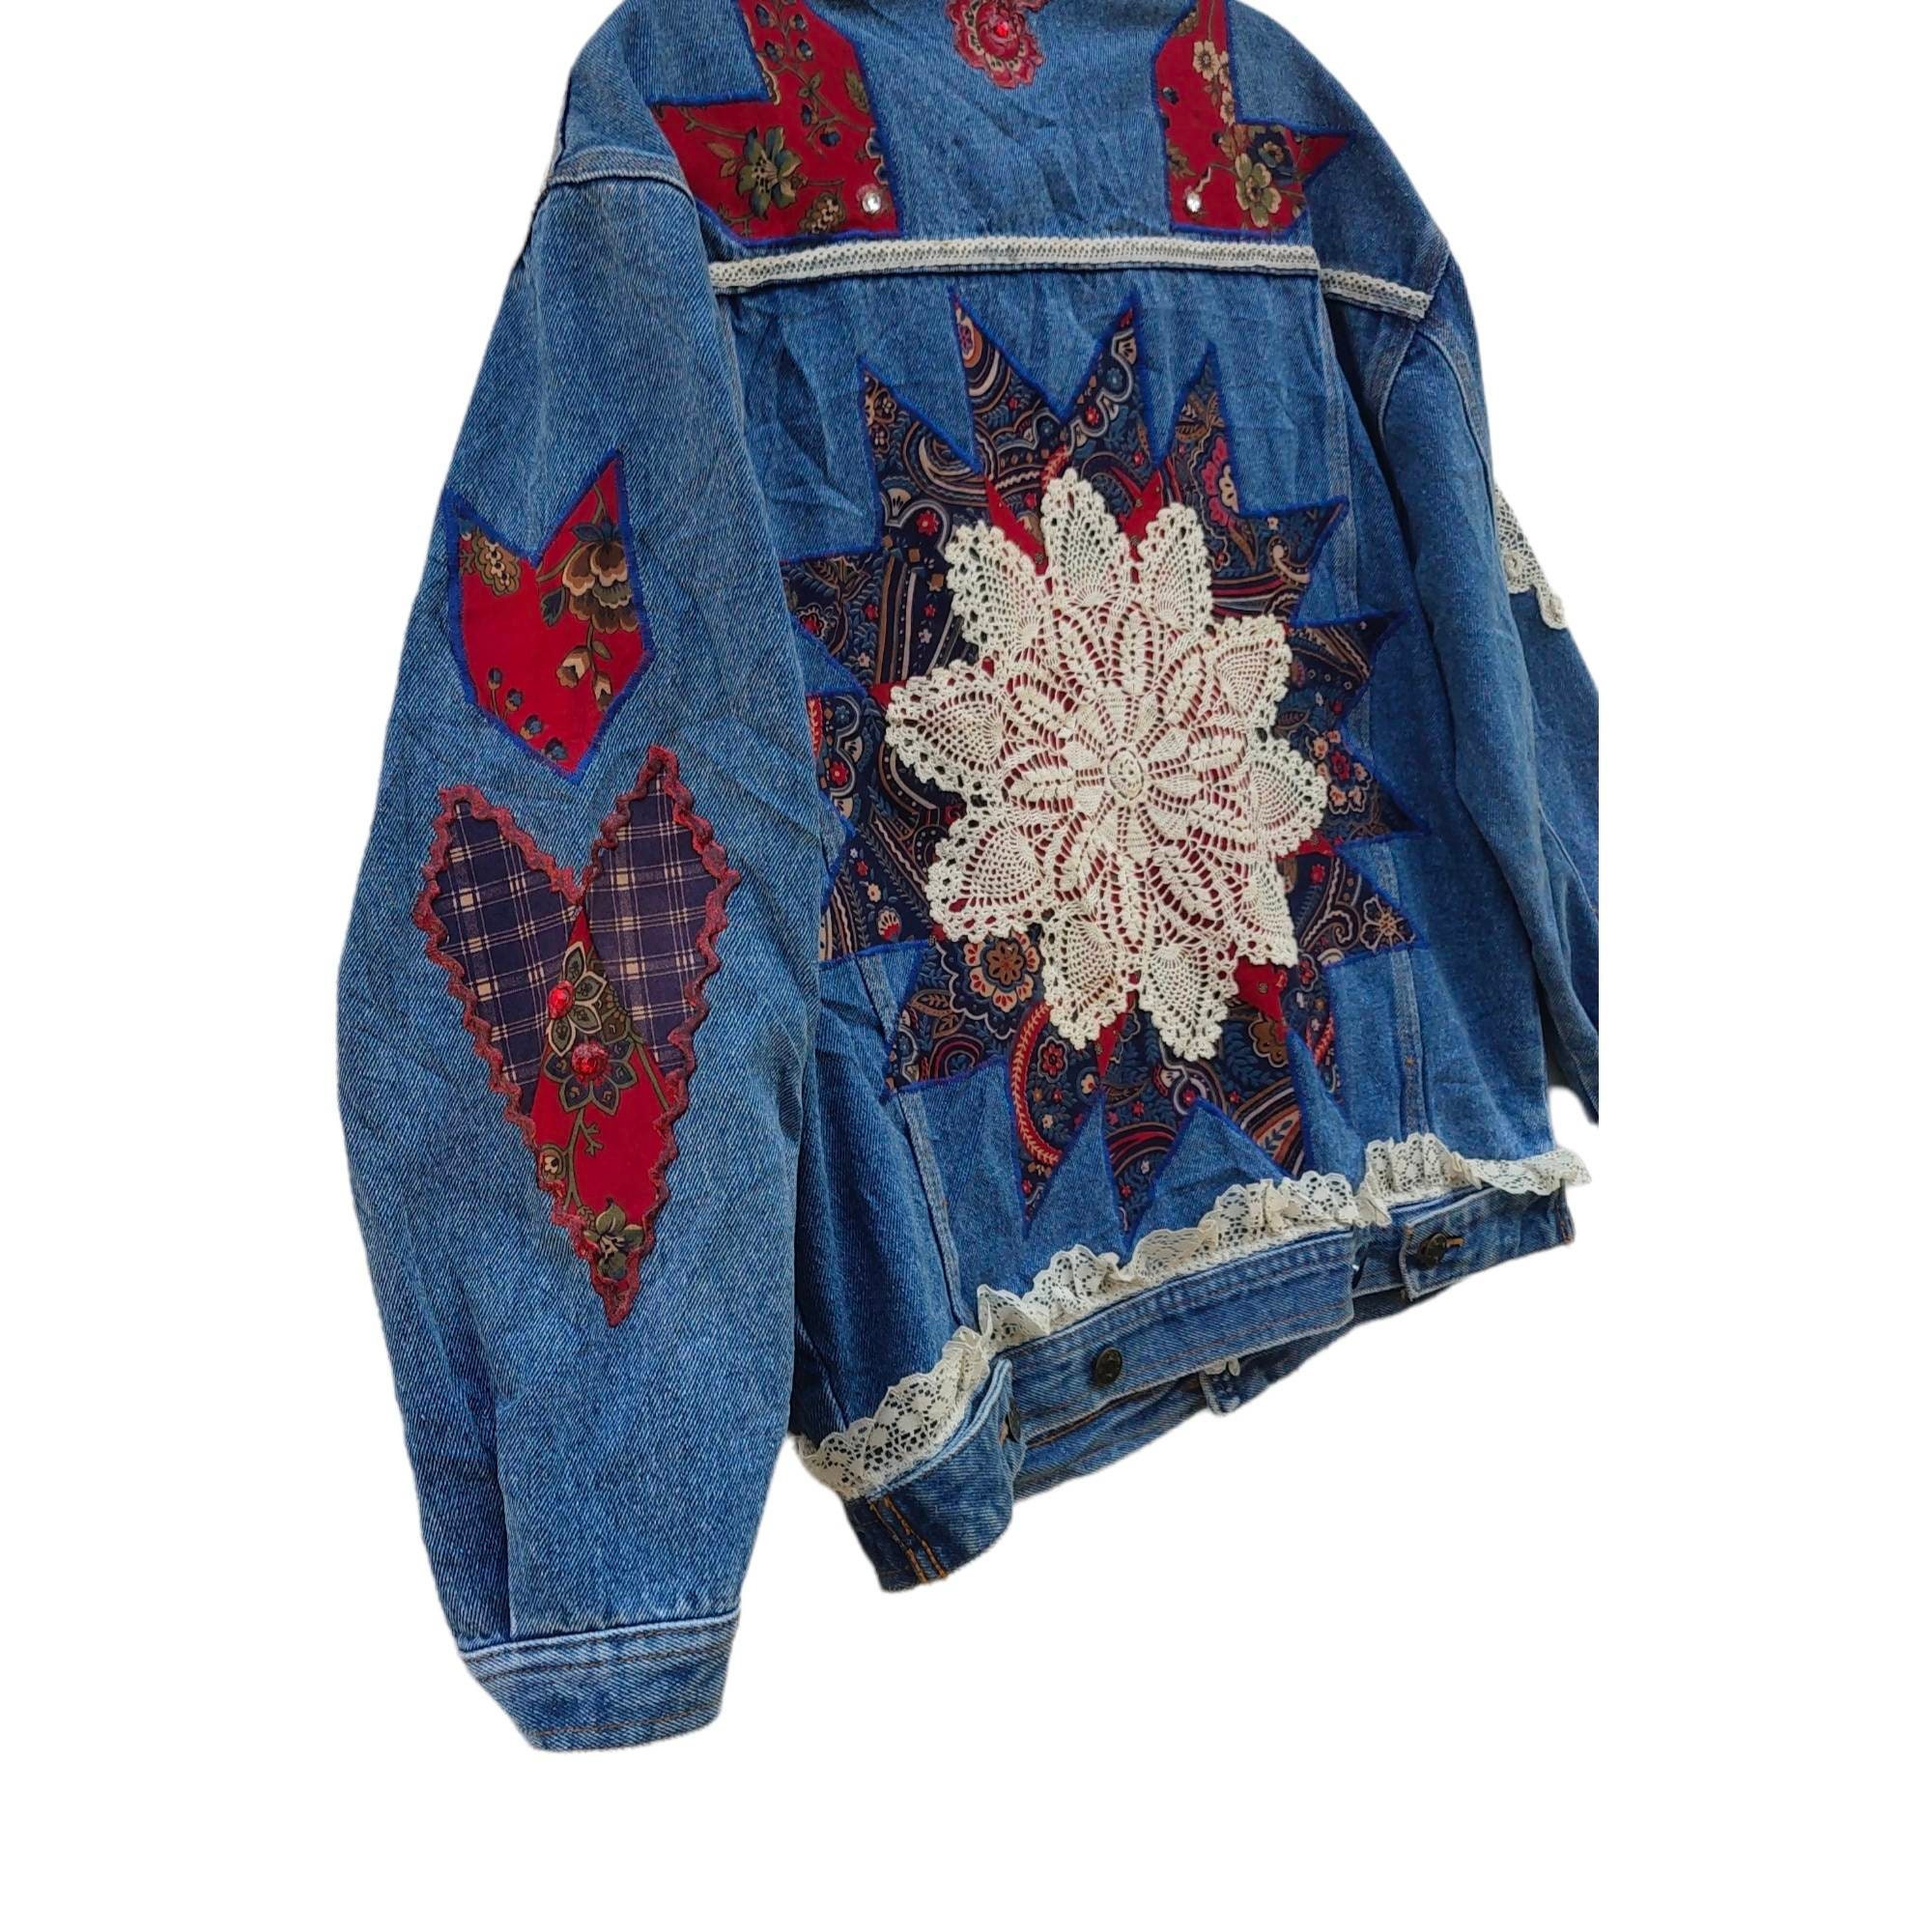 Vintage Embroidered Denim Jacket by SUNBELT Sportswear -  Canada